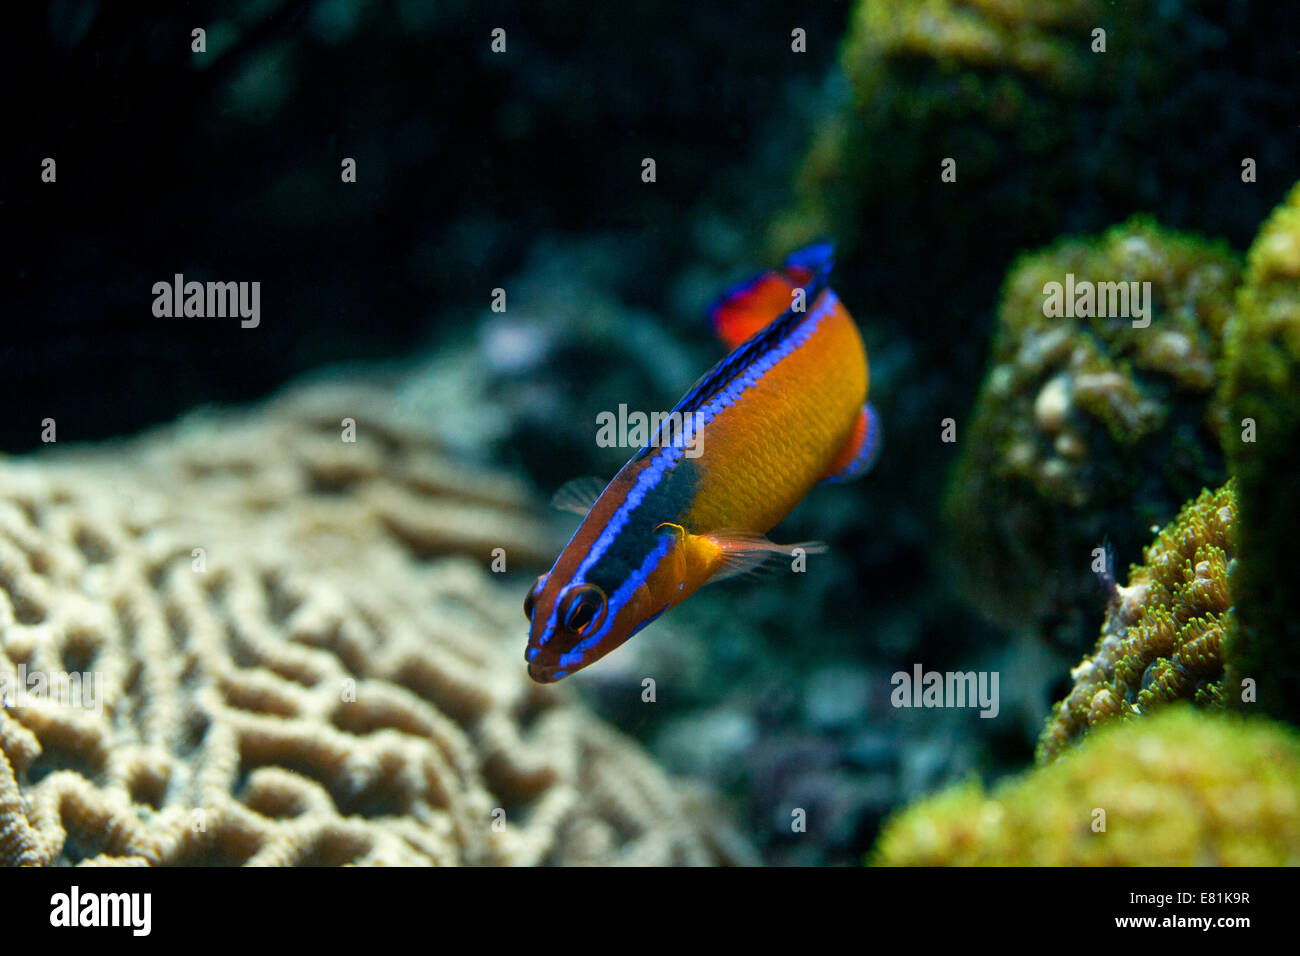 Neon Dottyback (Pseudochromis aldabraensis), blenny, Gulf of Oman, Oman Stock Photo